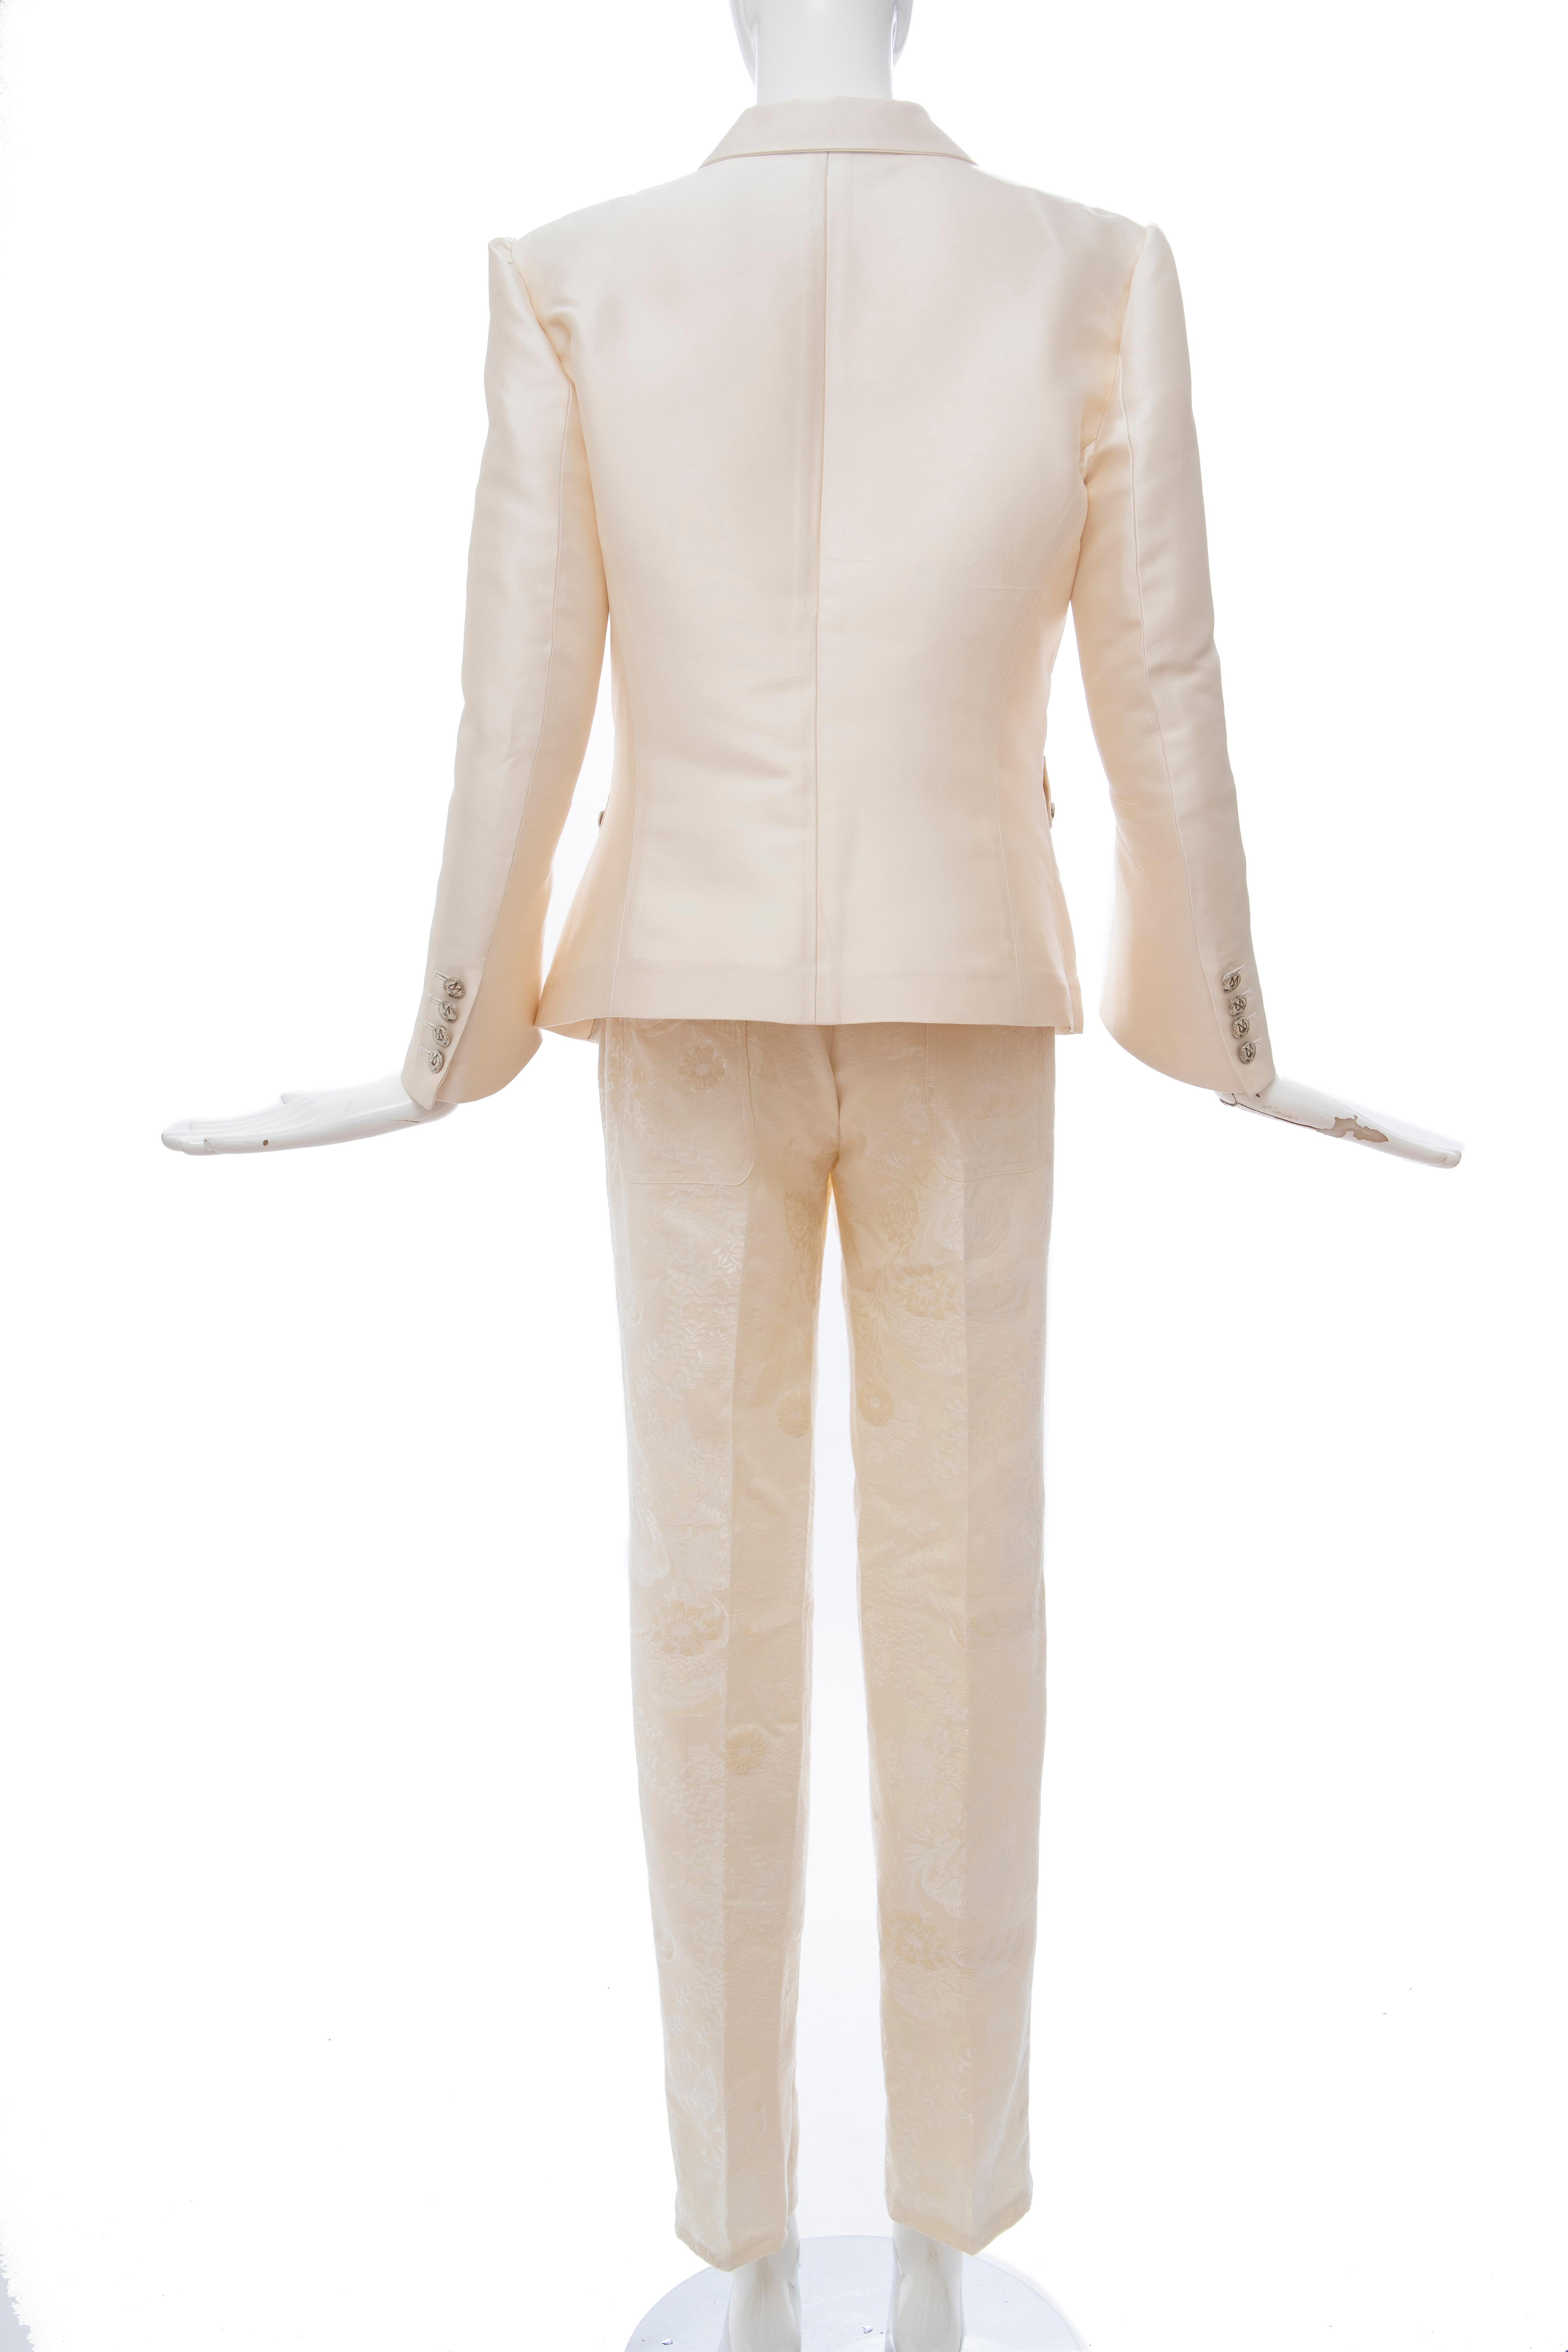 Nicolas Ghesquière for Balenciaga Runway Silk Jacquard Pant Suit, Spring 2006 For Sale 3